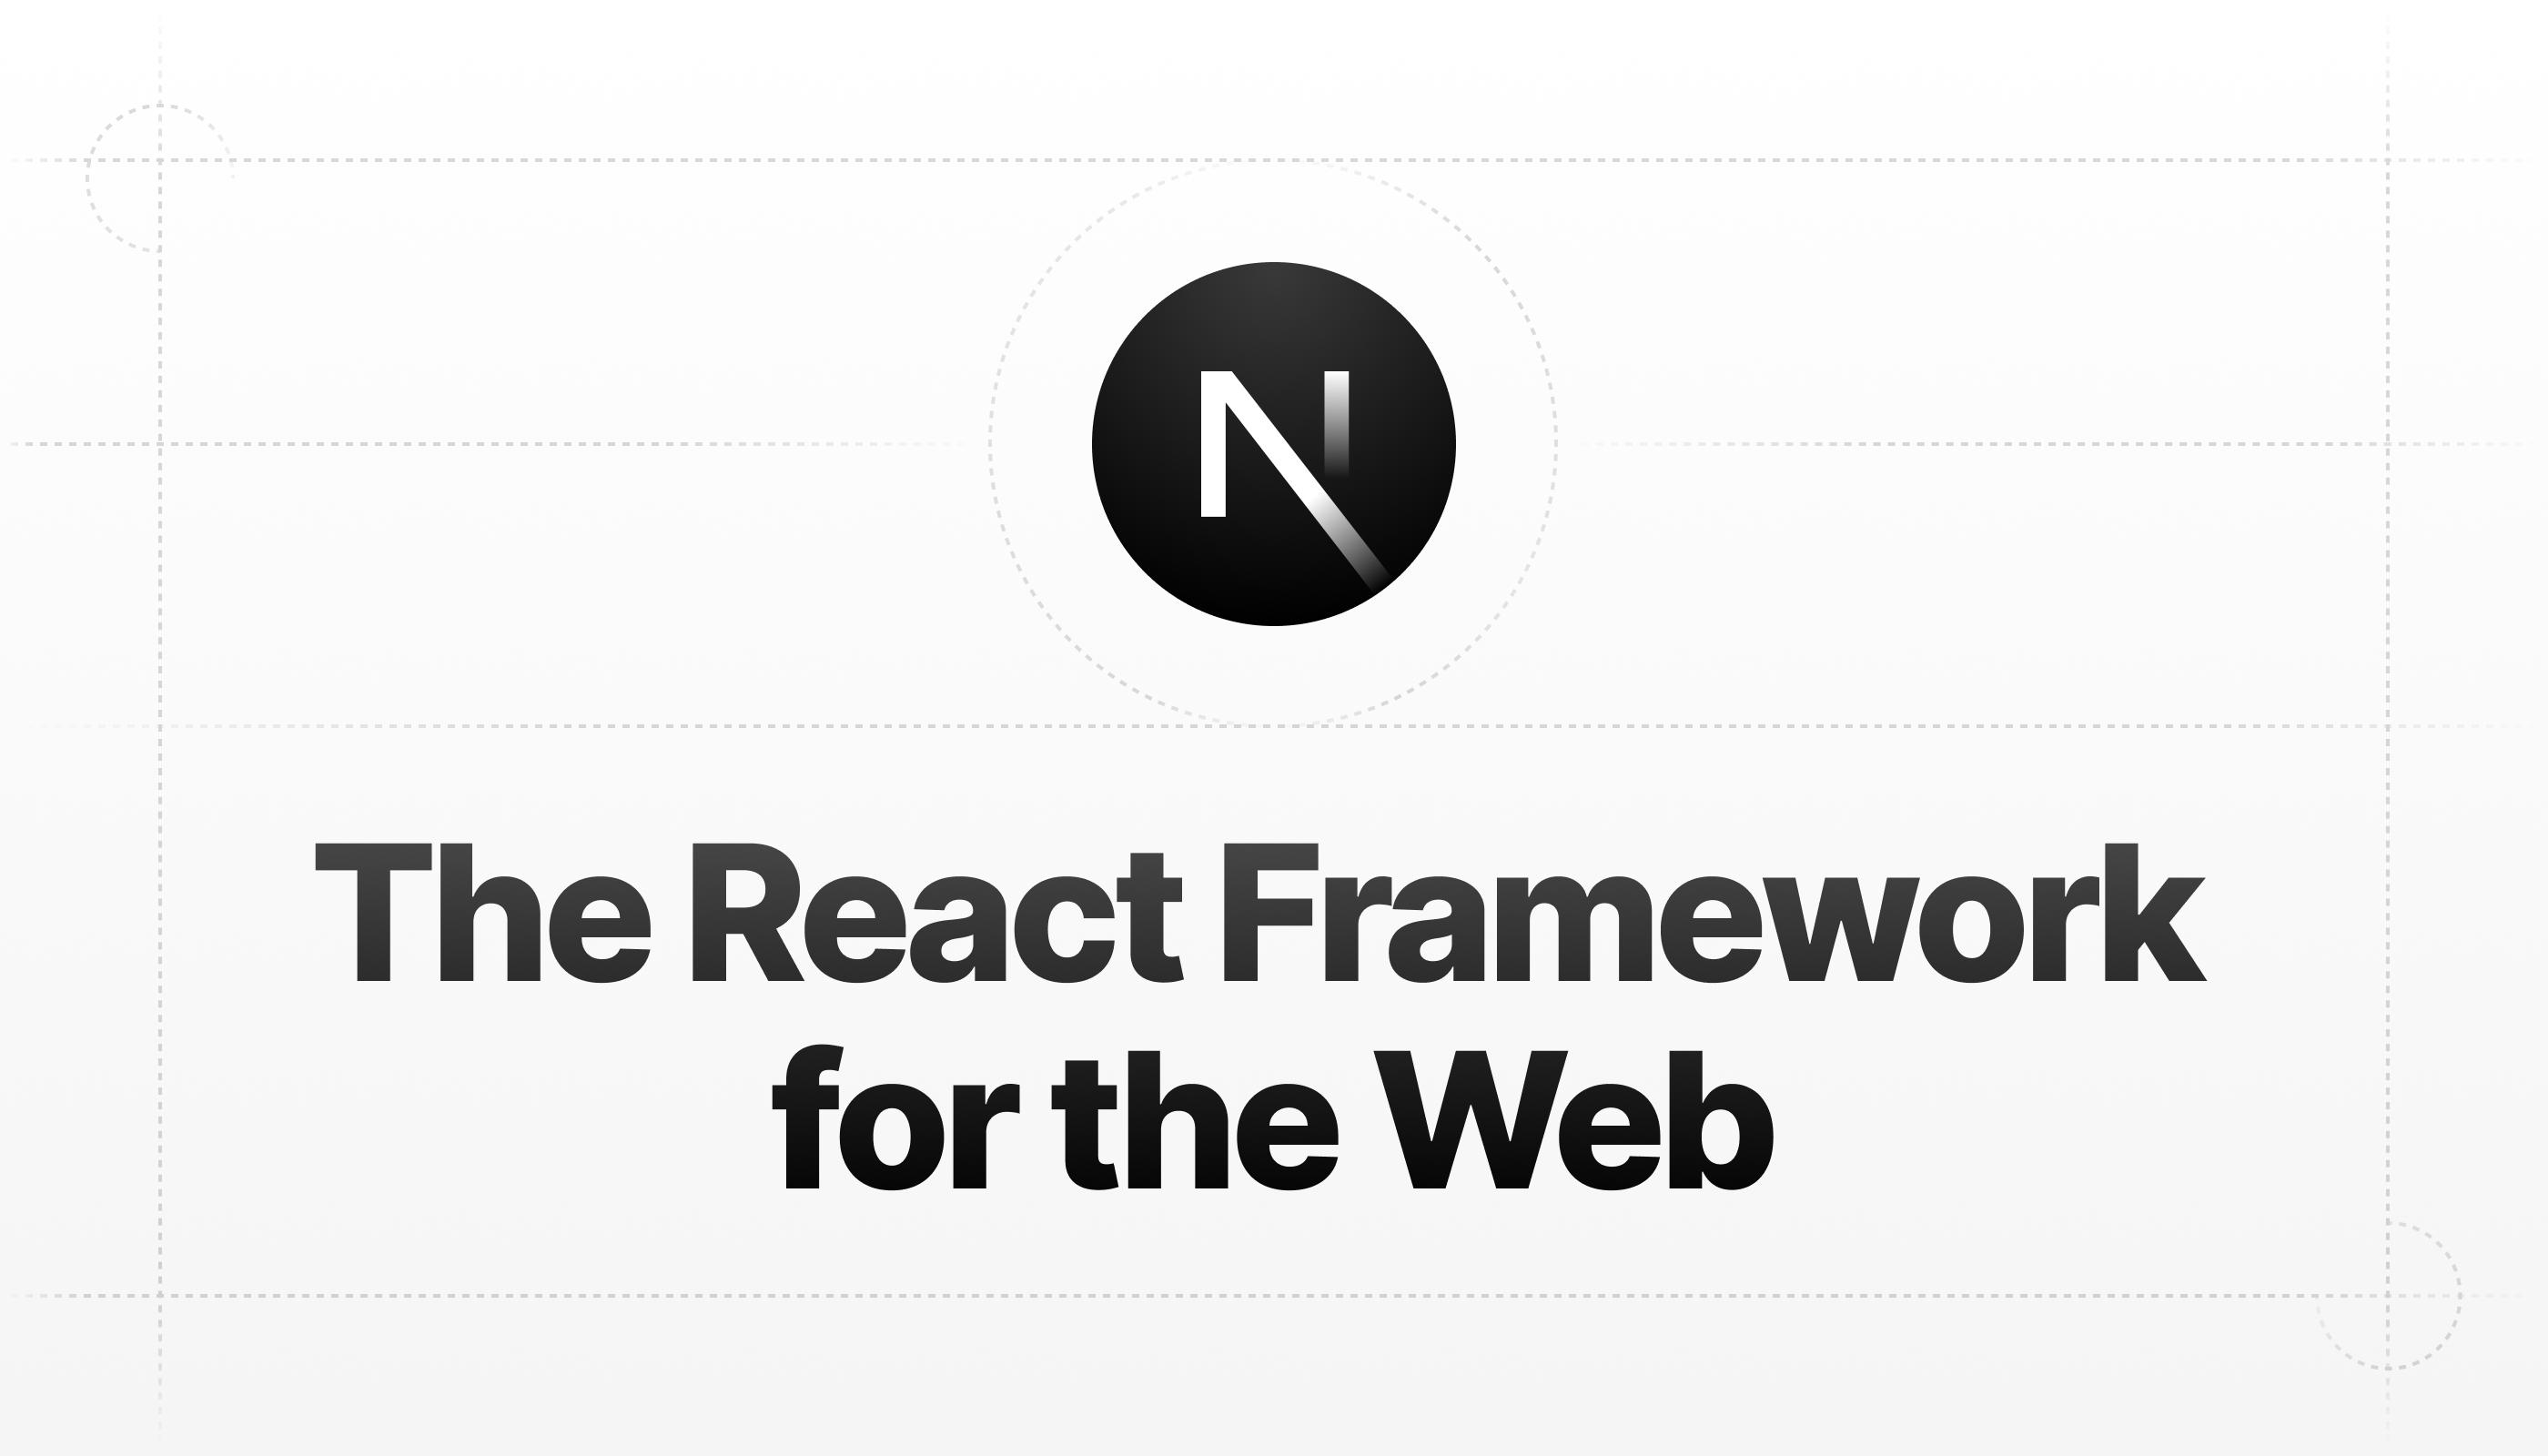 Next.js by Vercel - The React Framework